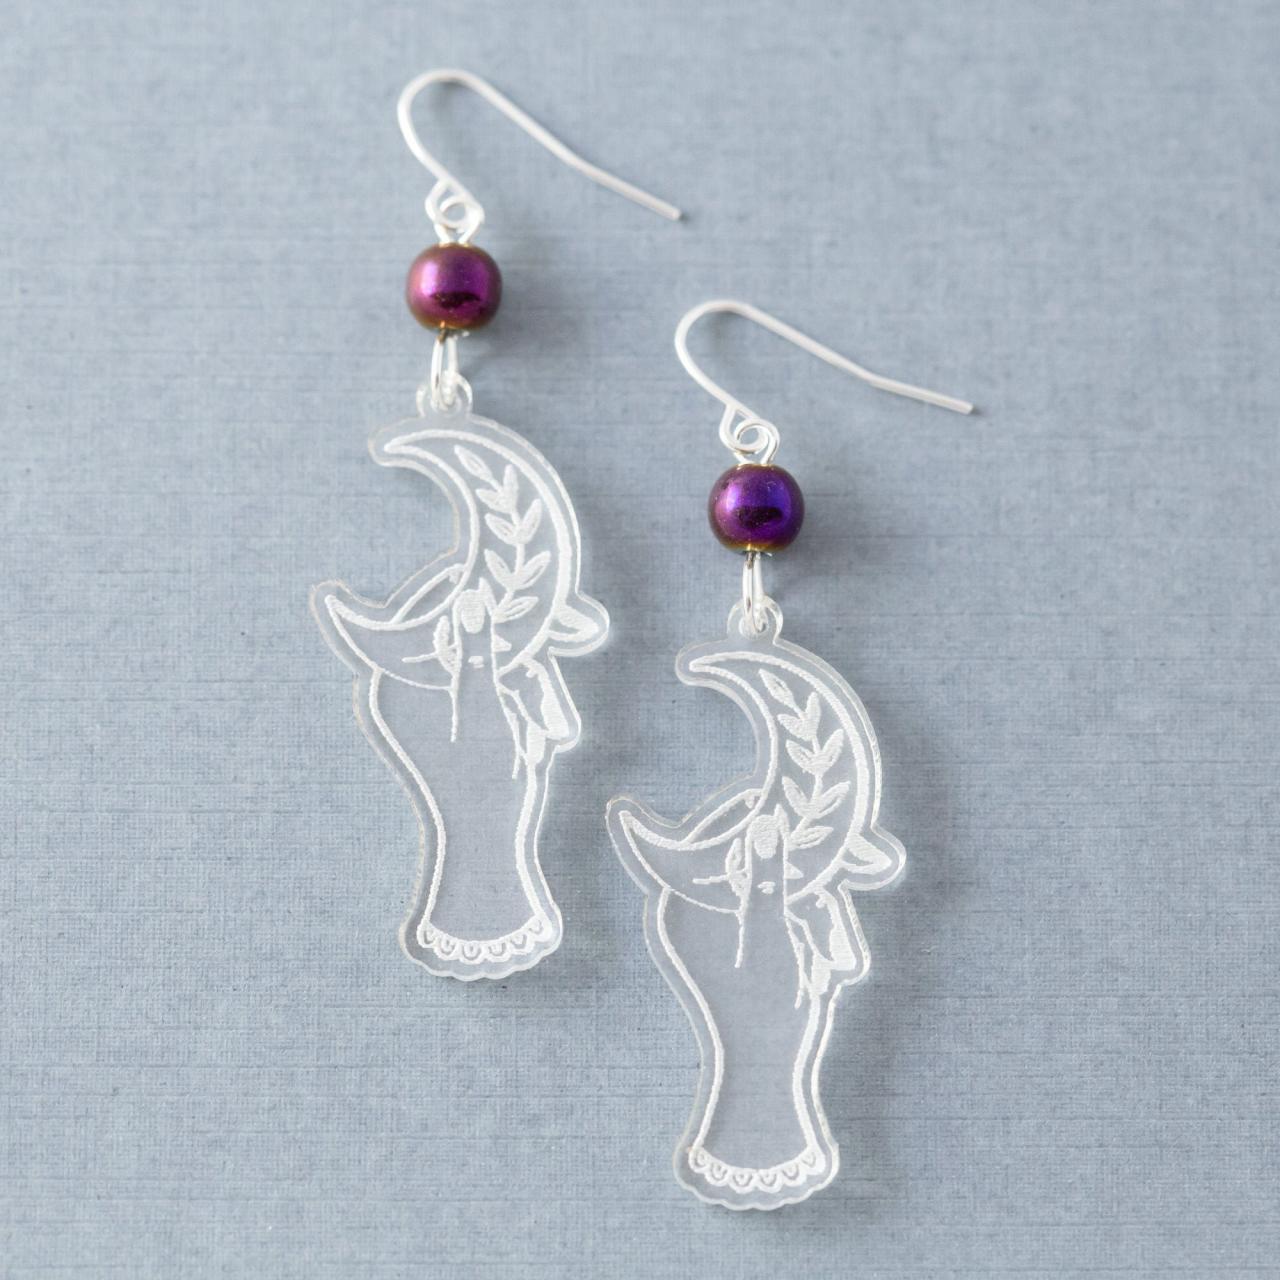 Woman's Hand Holding Crescent Moon Earrings, Purple & Transparent Earrings, Hand Earrings, Art Earrings, Acrylic Earrings,